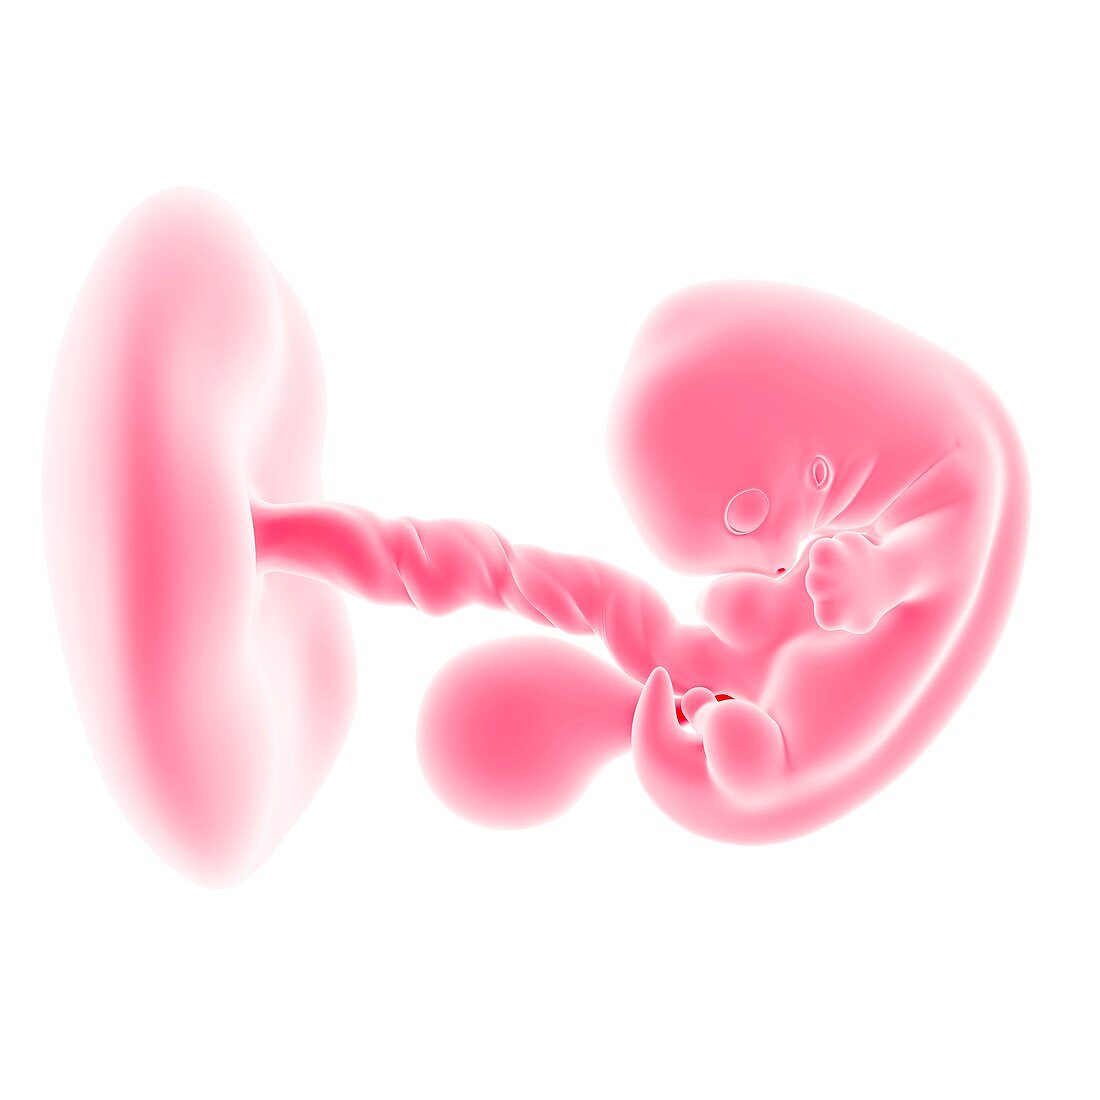 Human fetus age 7 weeks